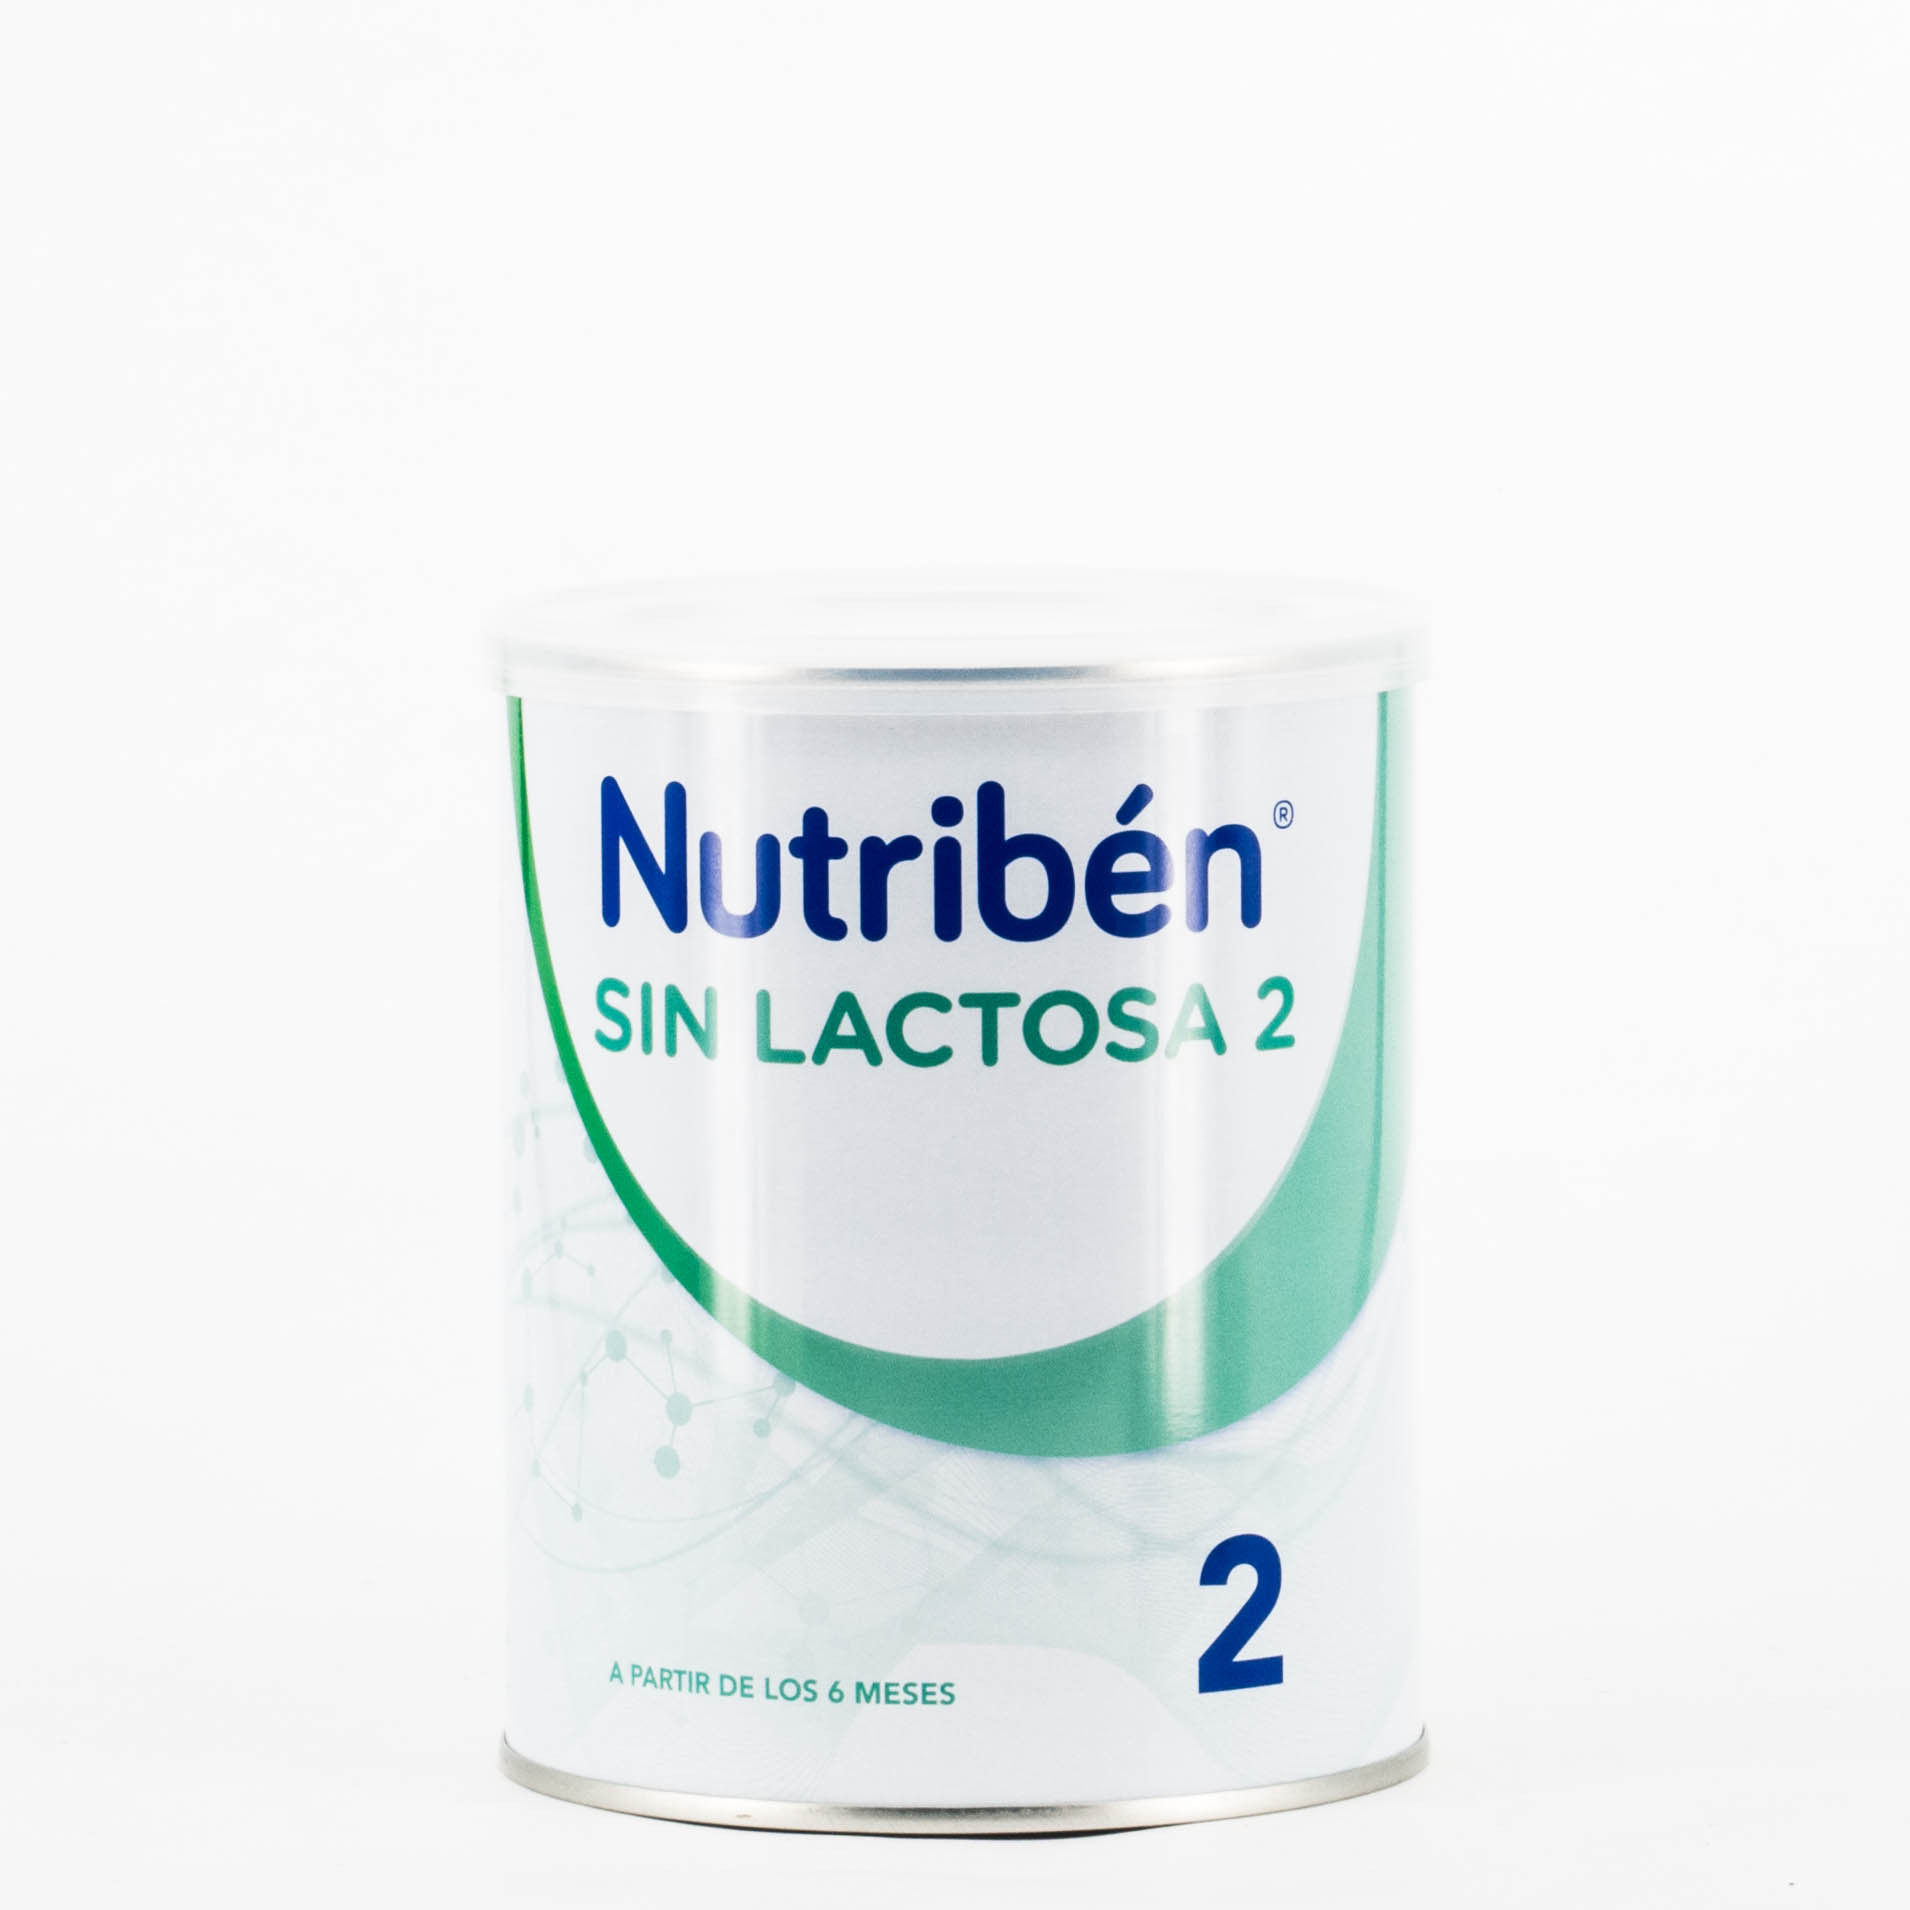 Nutribén® Sin lactosa 1 para lactantes con intolerancia a la lactosa